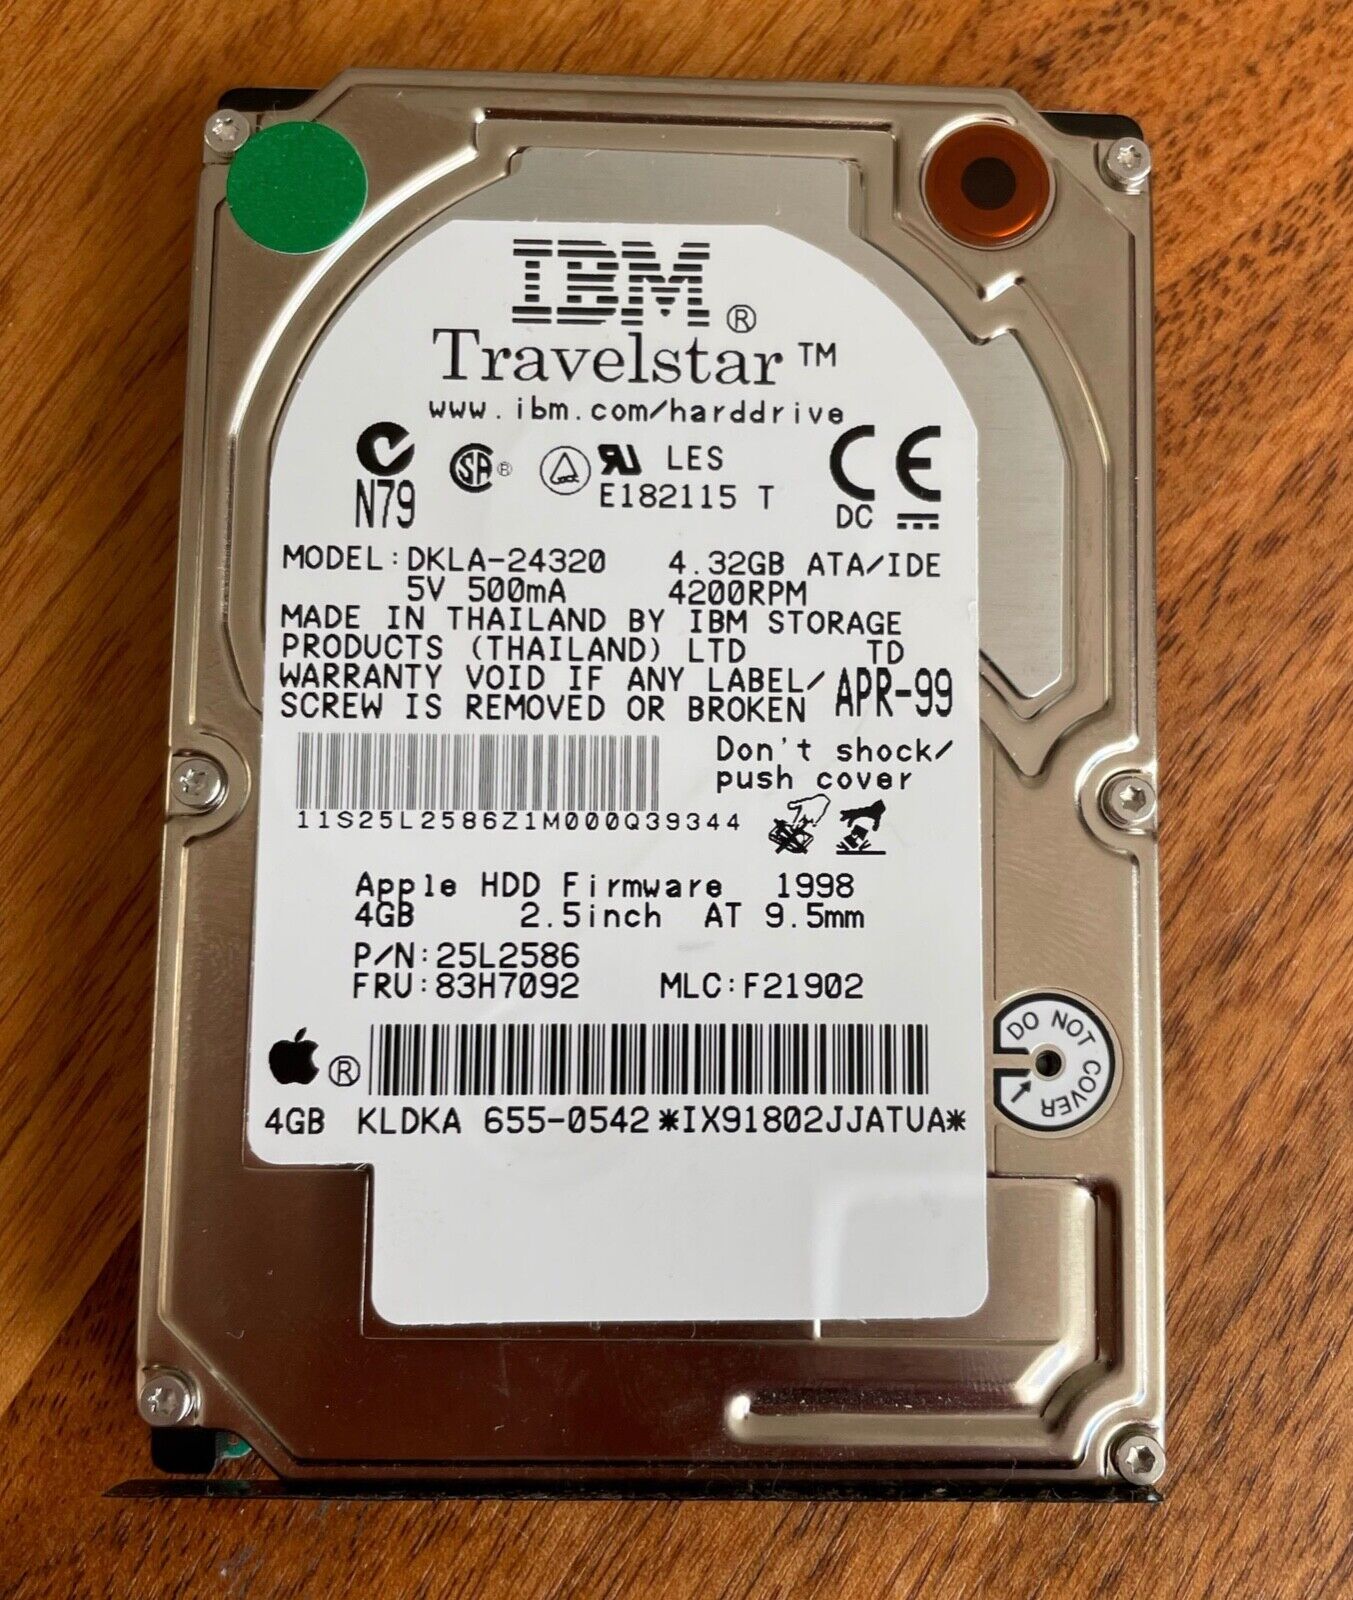 IBM Travelstar IDE/PATA 4320 MB, DKLA-24320, 2.5